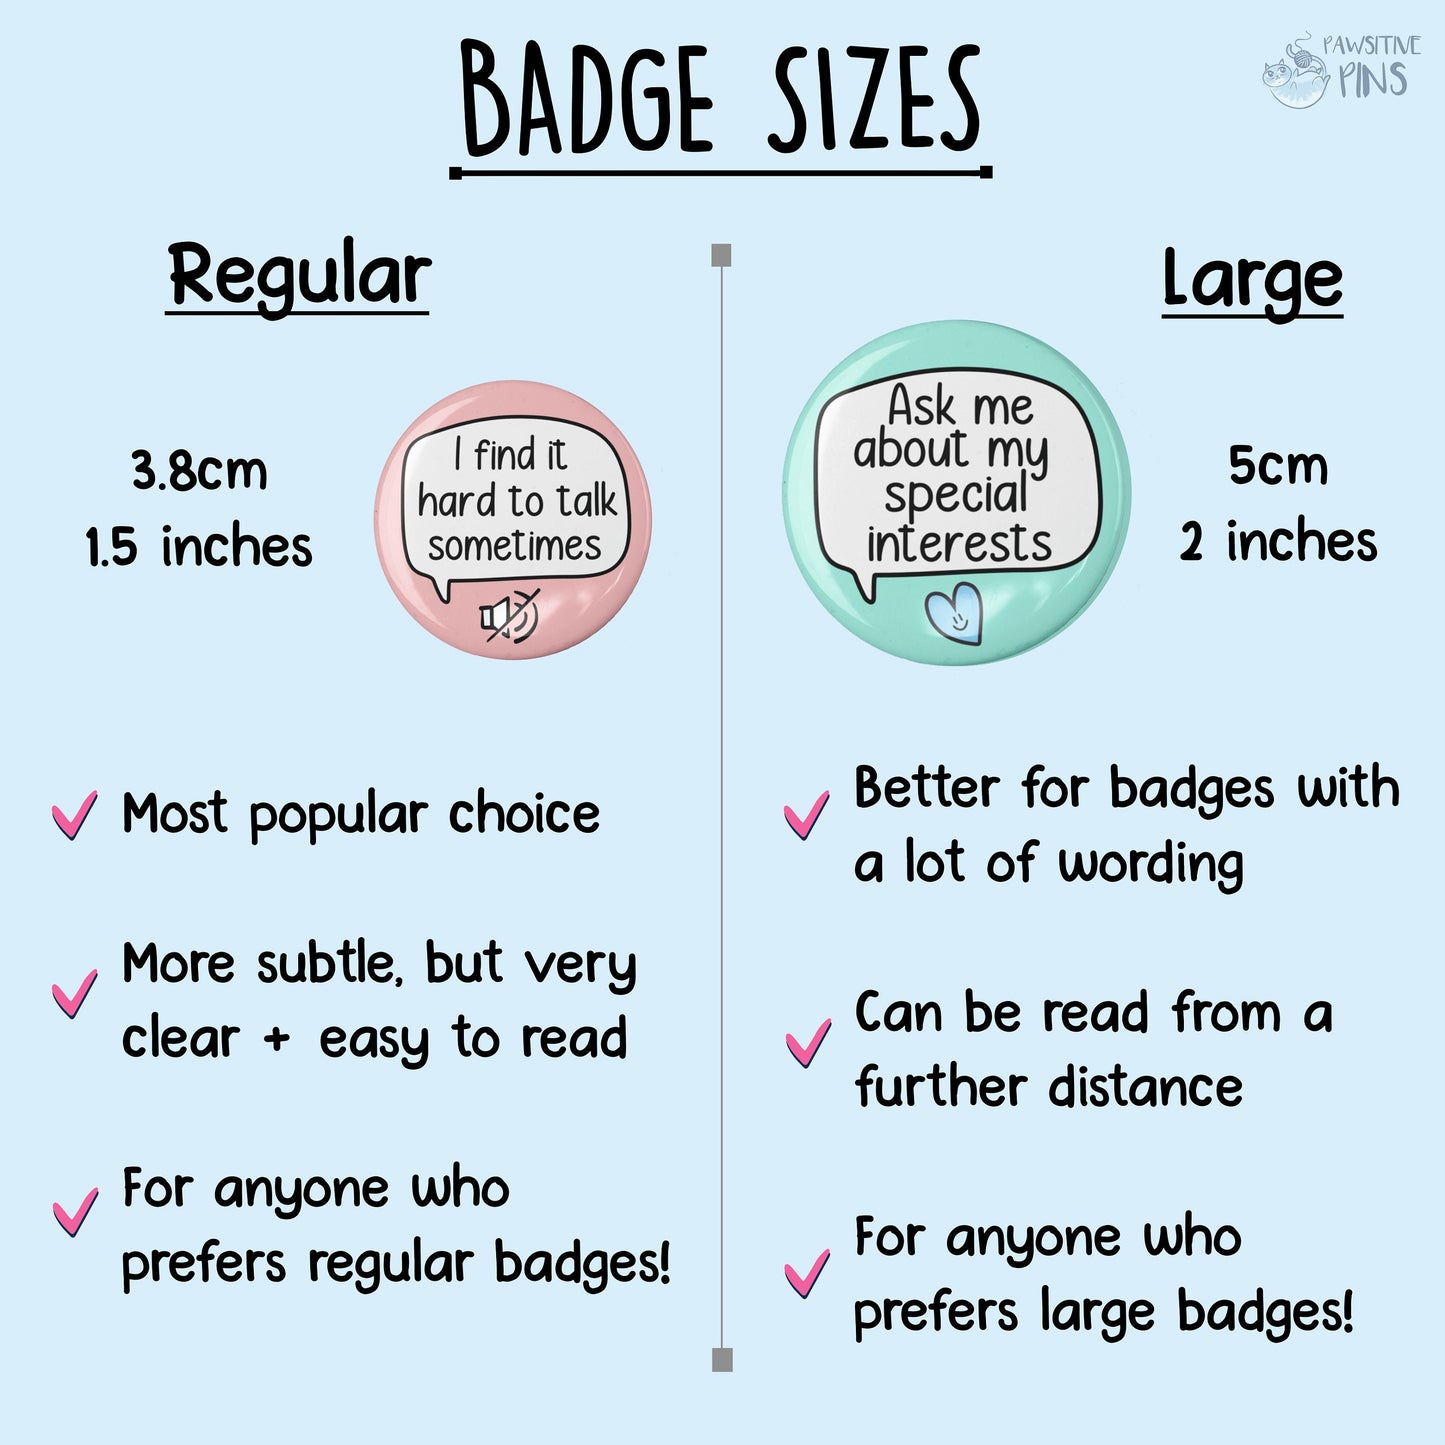 I'm Having A Bad Sensory Day - Pin Badge | Sensory processing - Autism badges